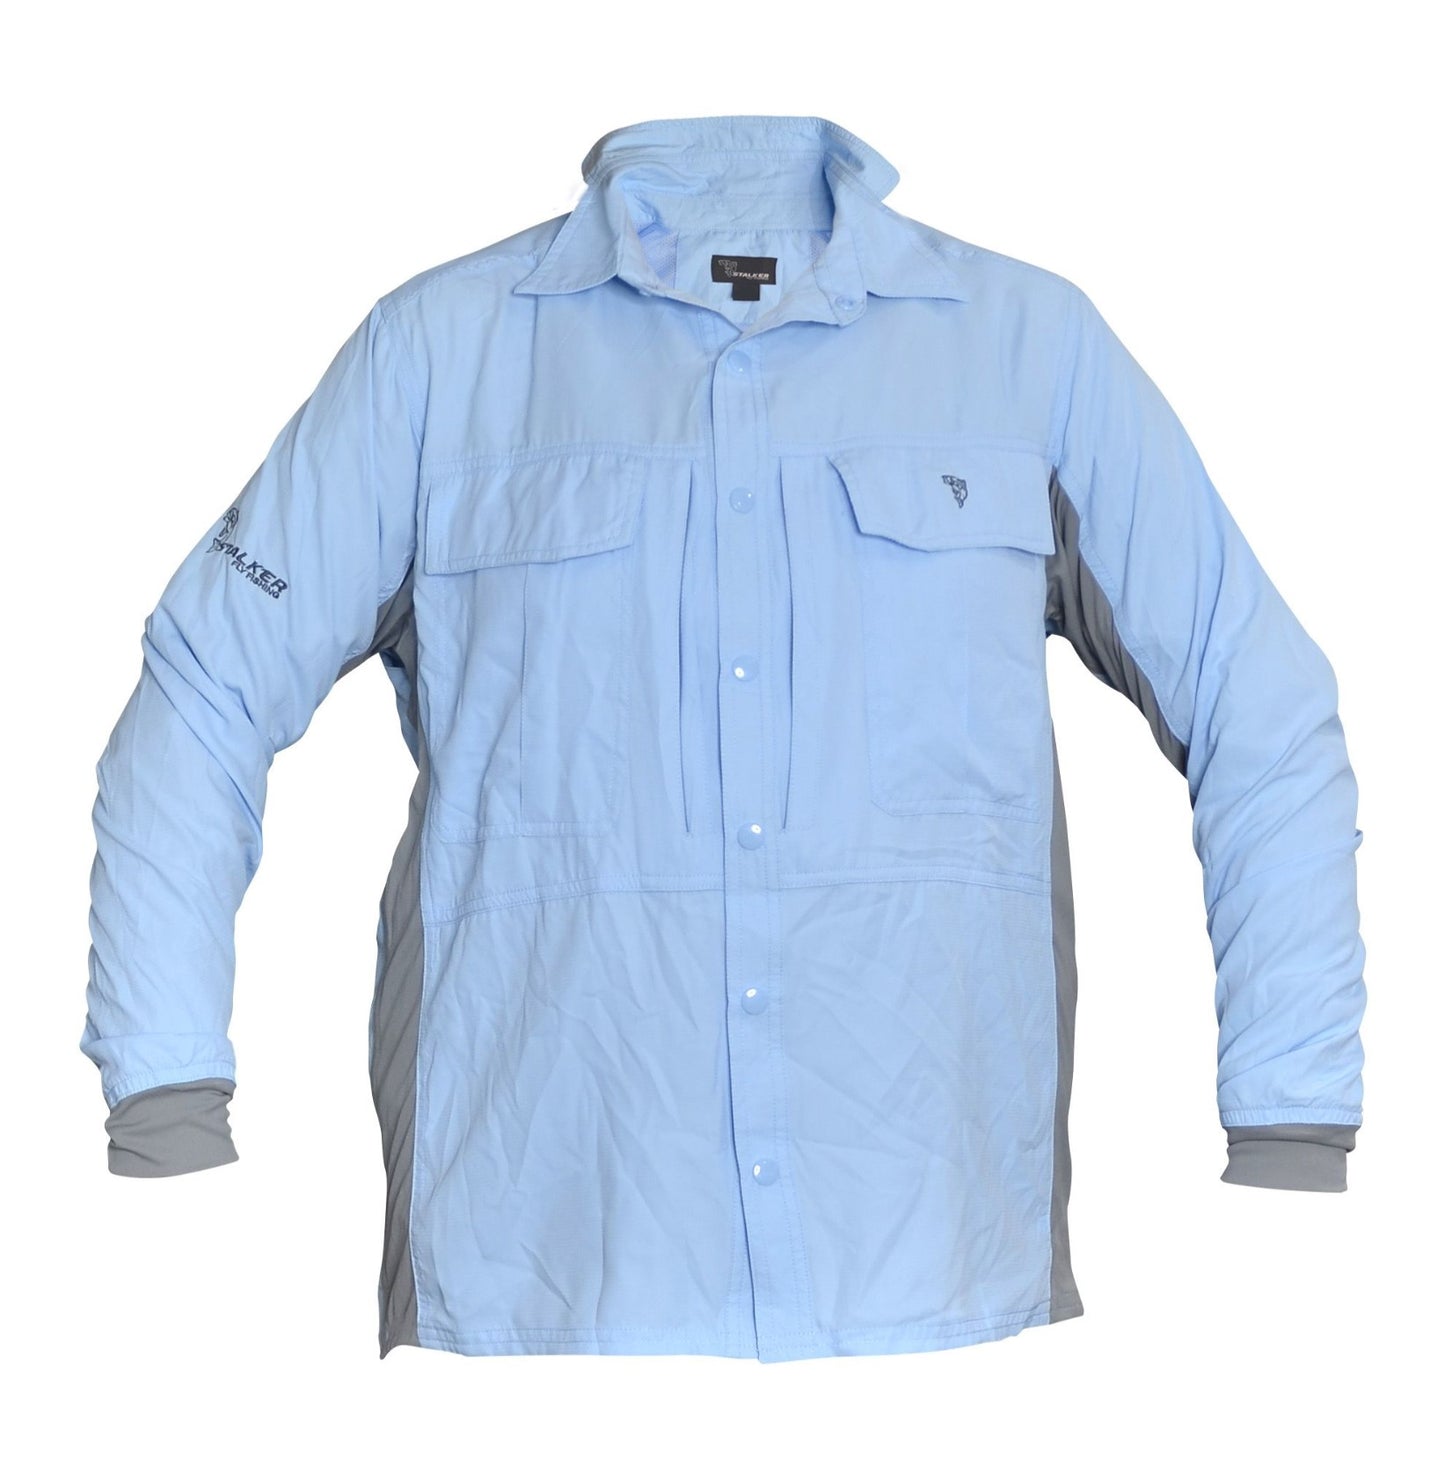 Stalker Flex-Fit Fishing Shirt - Blue